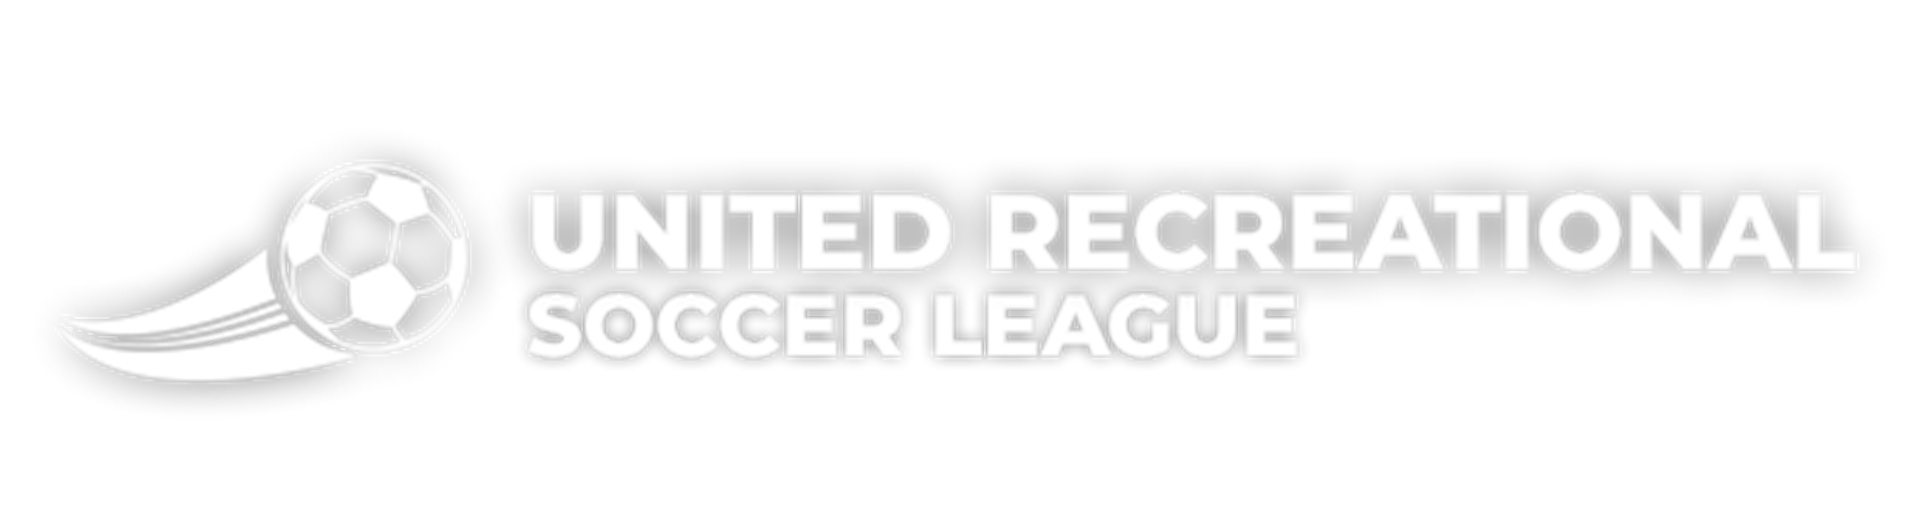  United Recreational Soccer League